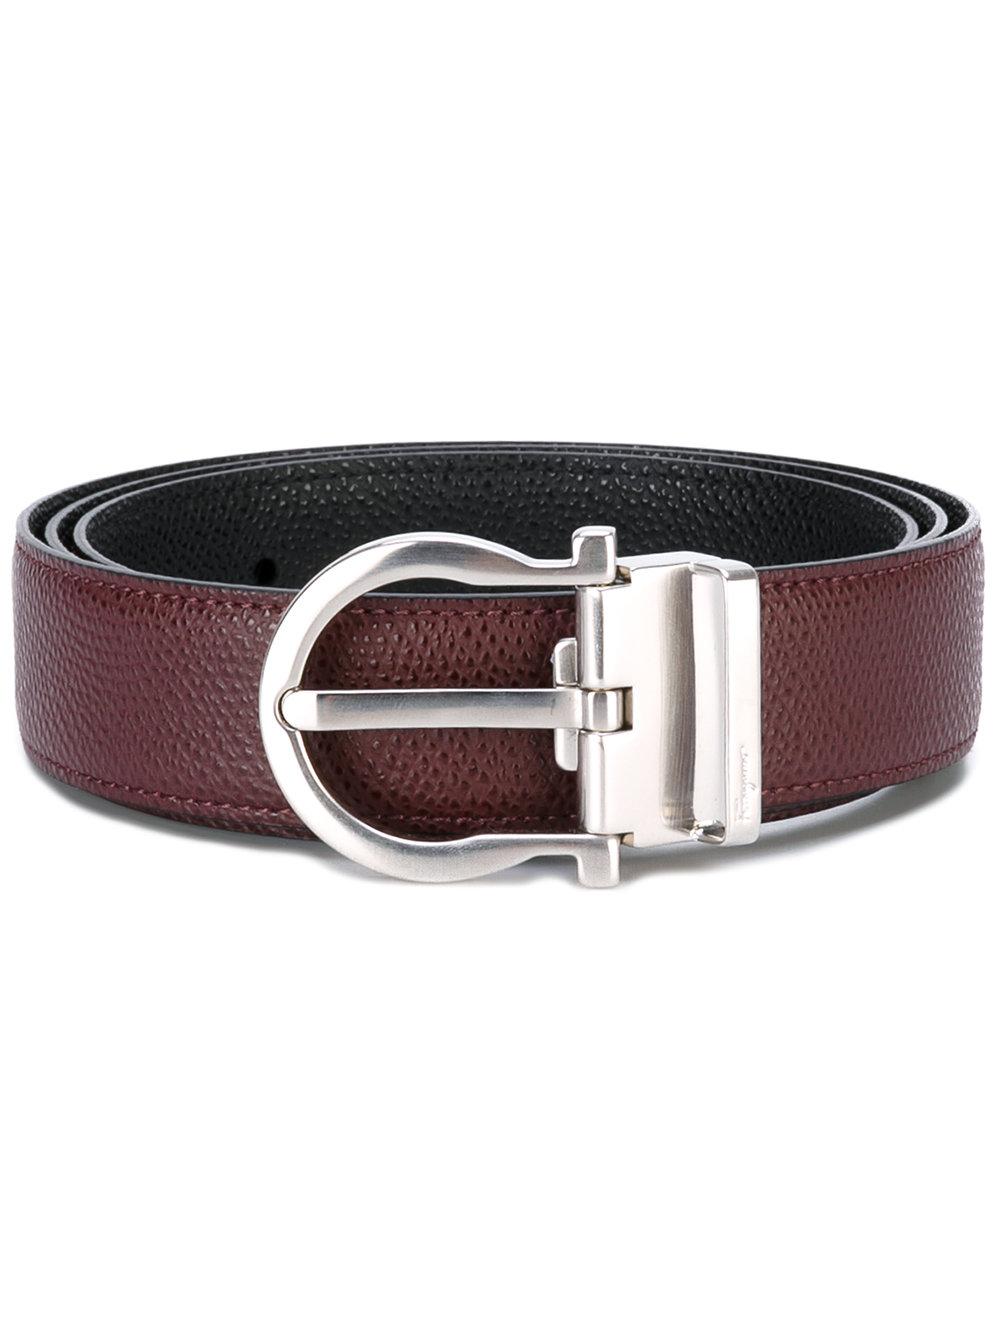 Ferragamo Leather Reversible Belt in Red for Men - Lyst